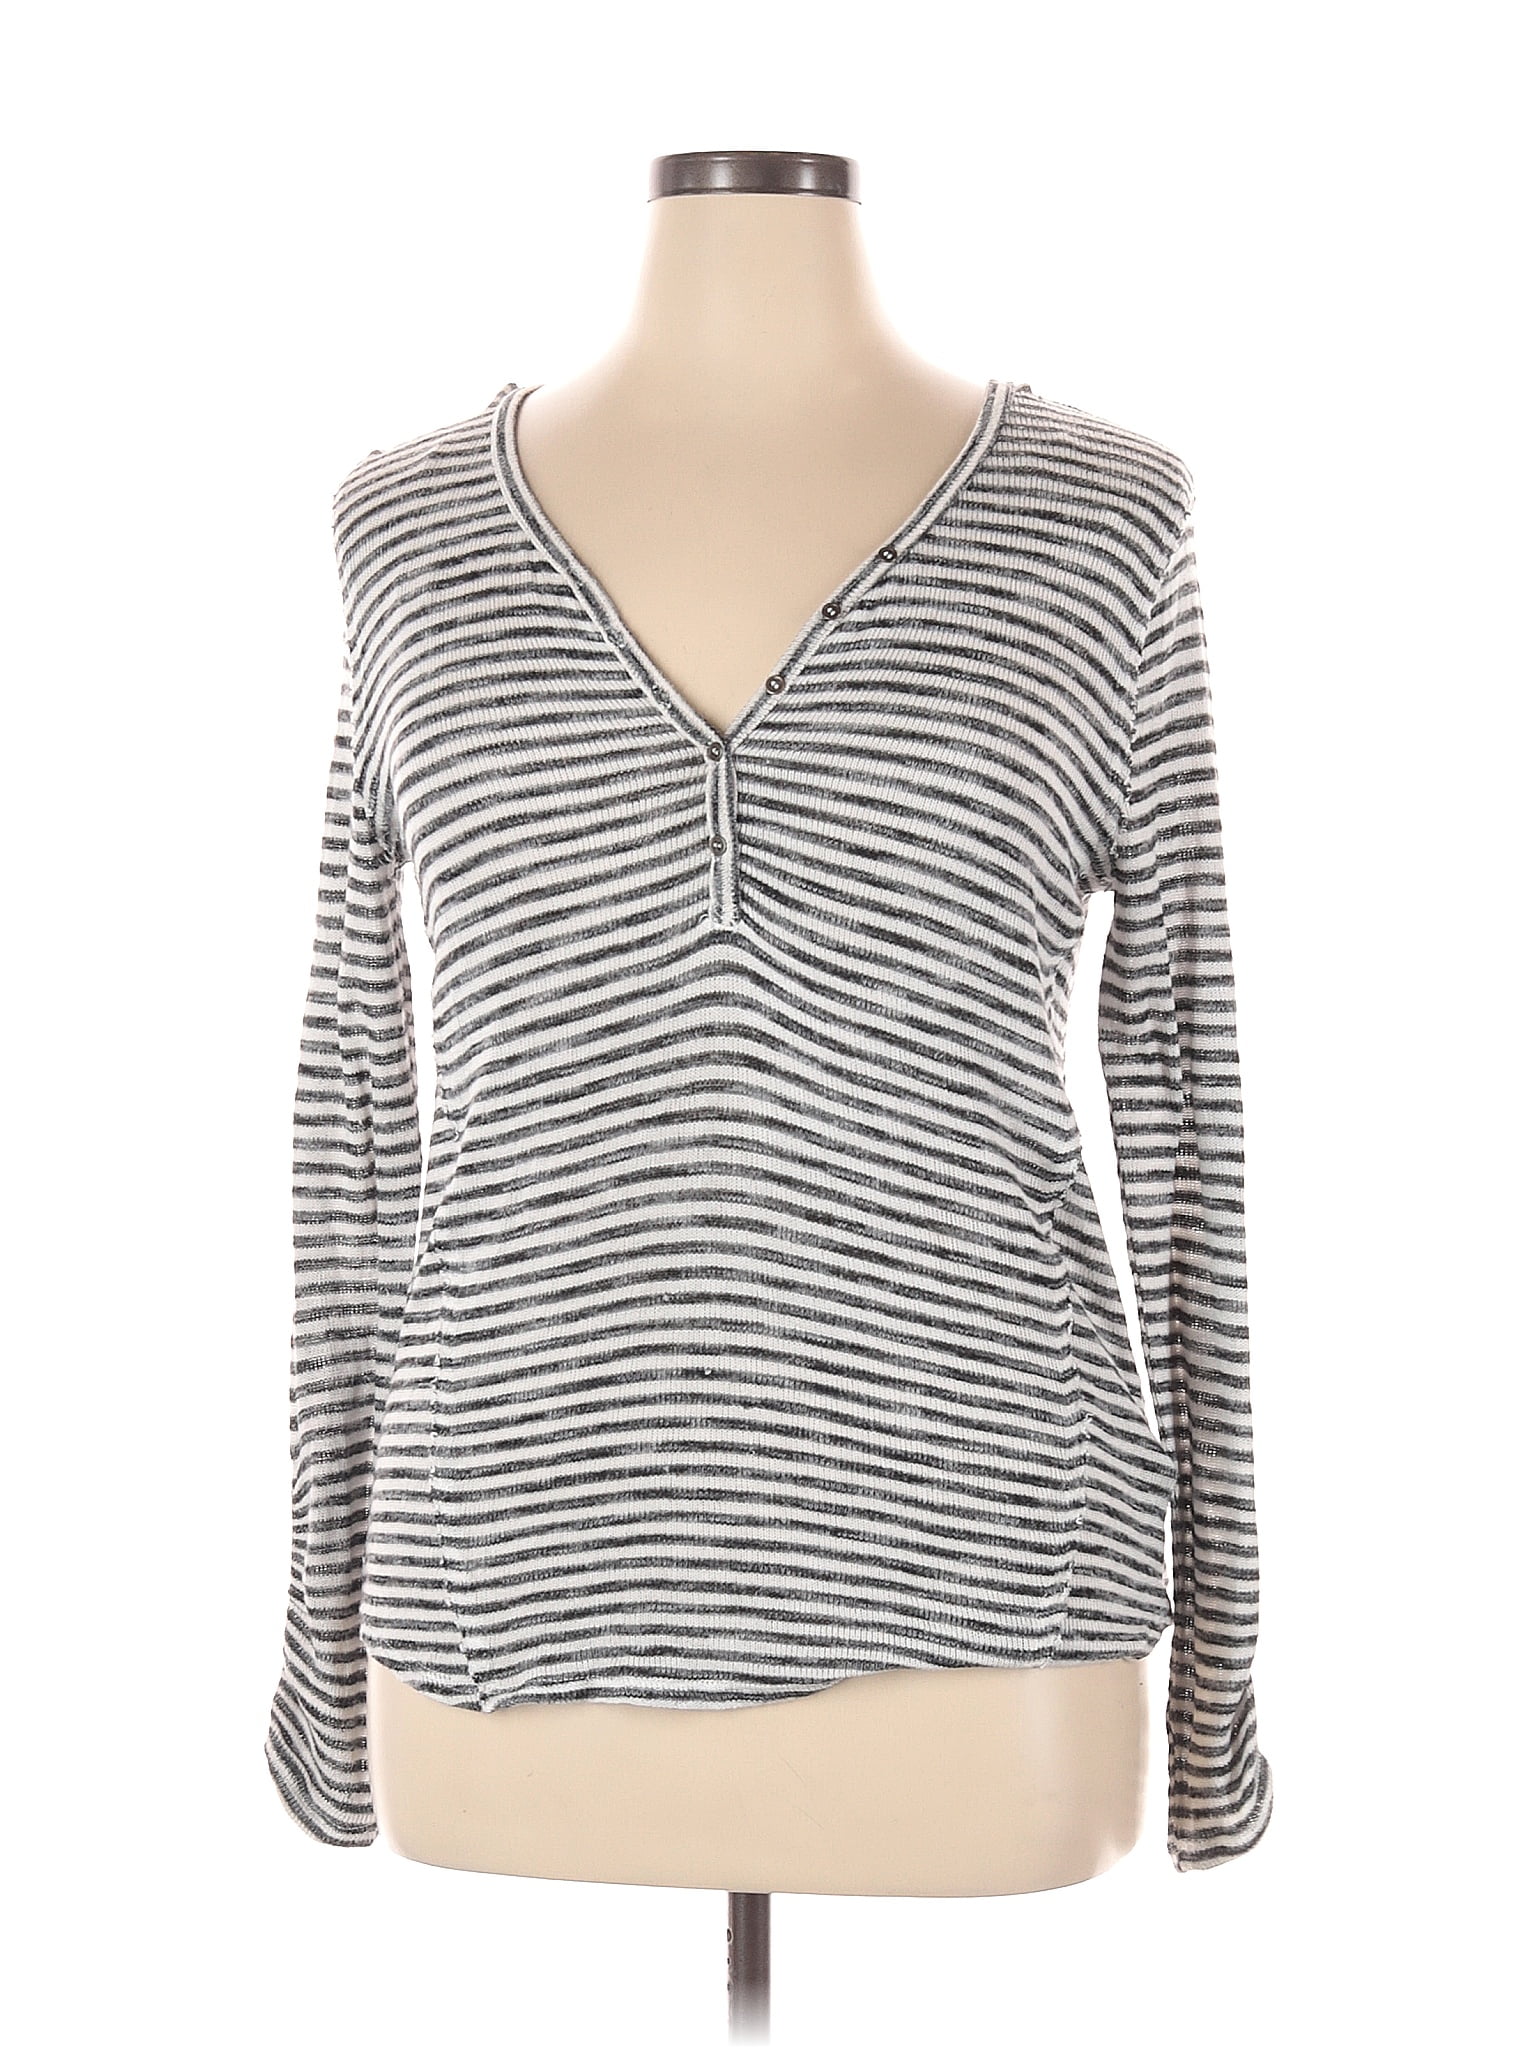 J.Jill Color Block White Pullover Sweater Size XS (Petite) - 71% off